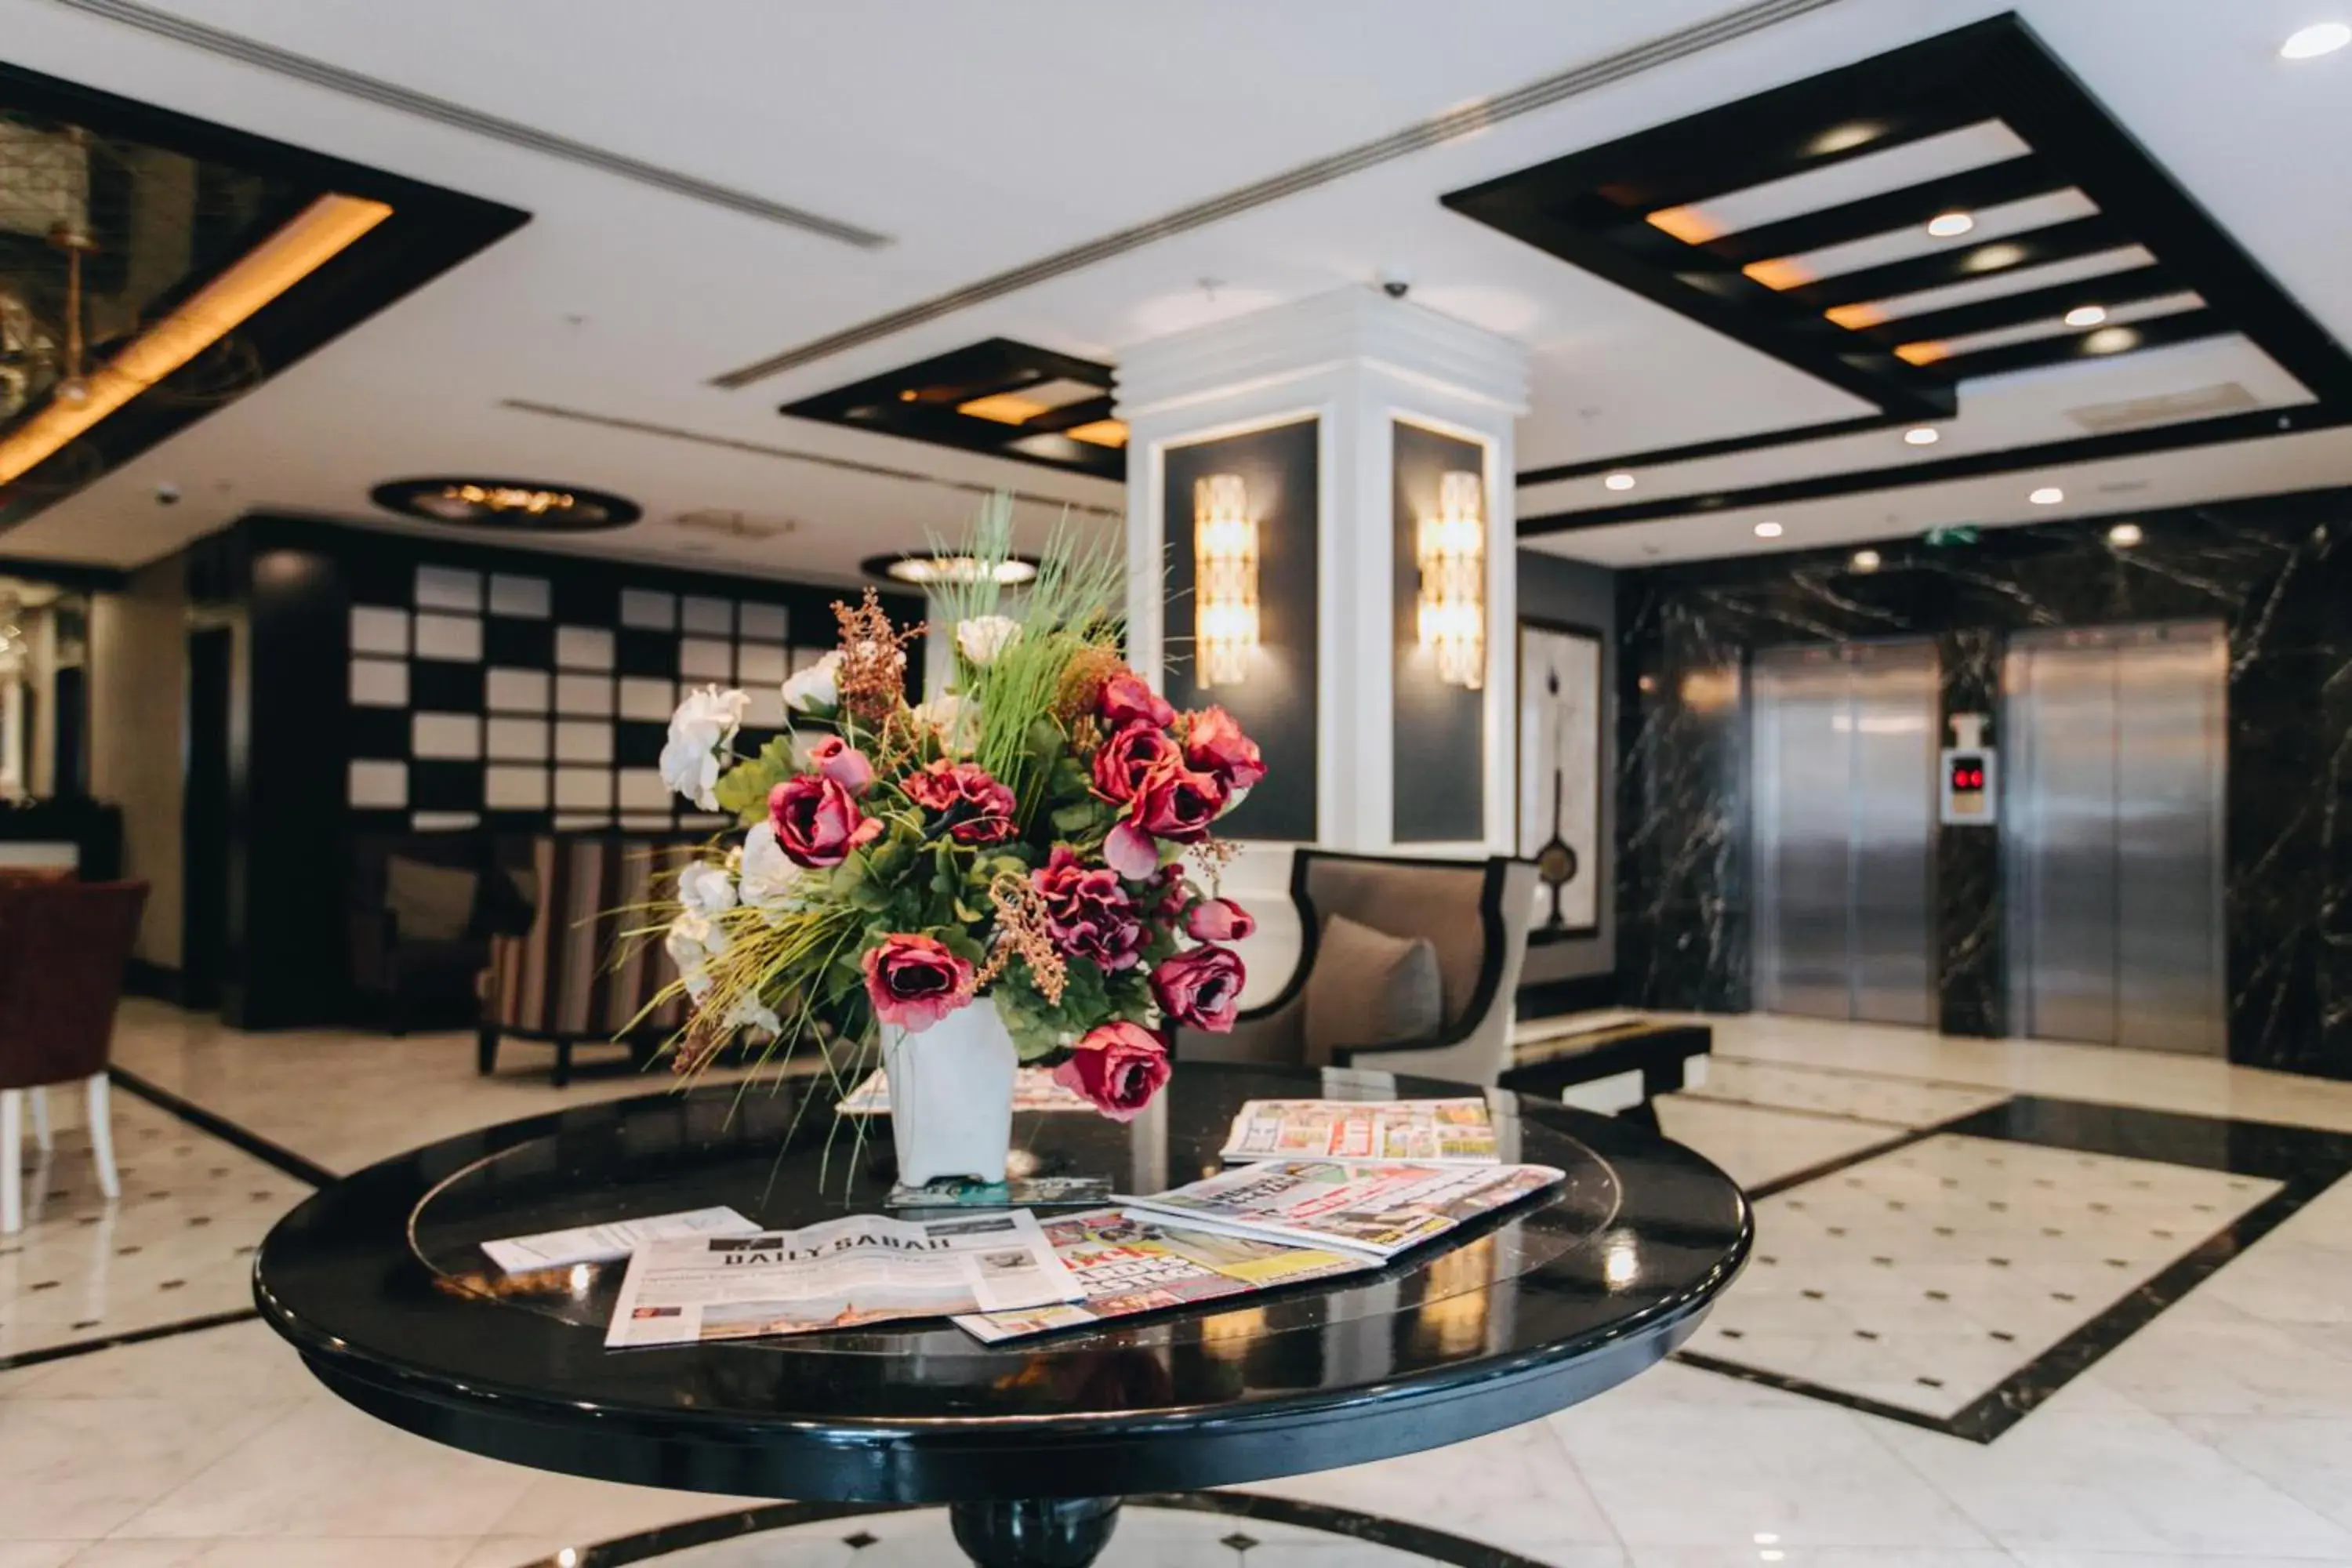 Lobby or reception, Lobby/Reception in Mia Berre Hotels